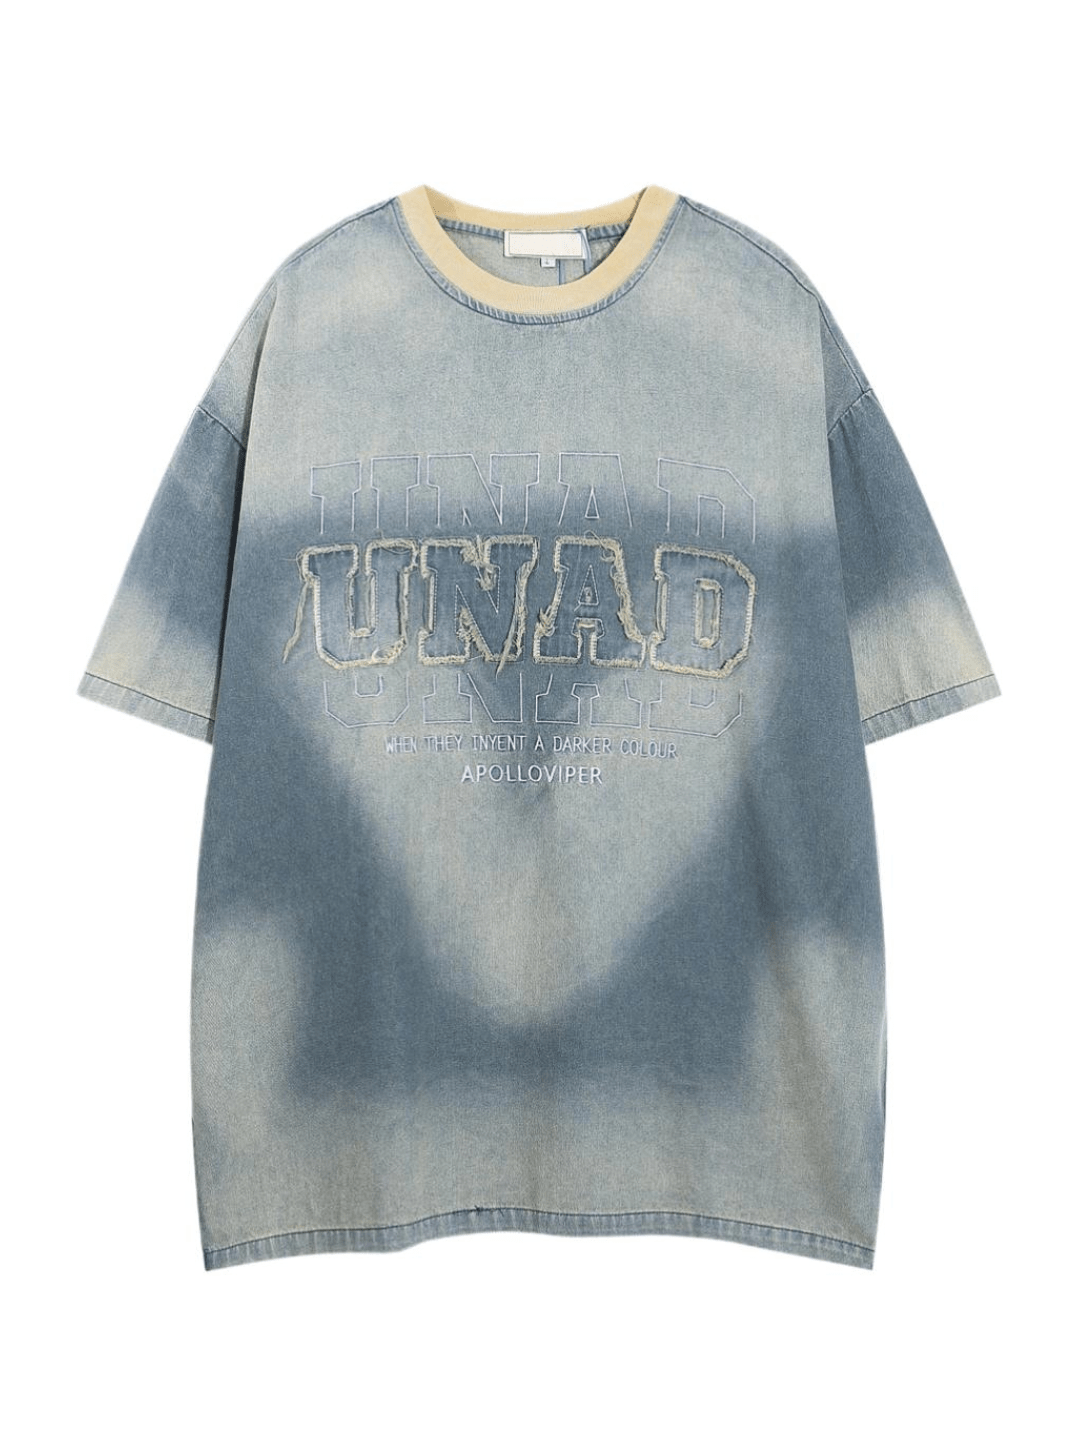 【Mz】Retro Tie-Dye Vintage Patch Embroidery T-Shirt na1175